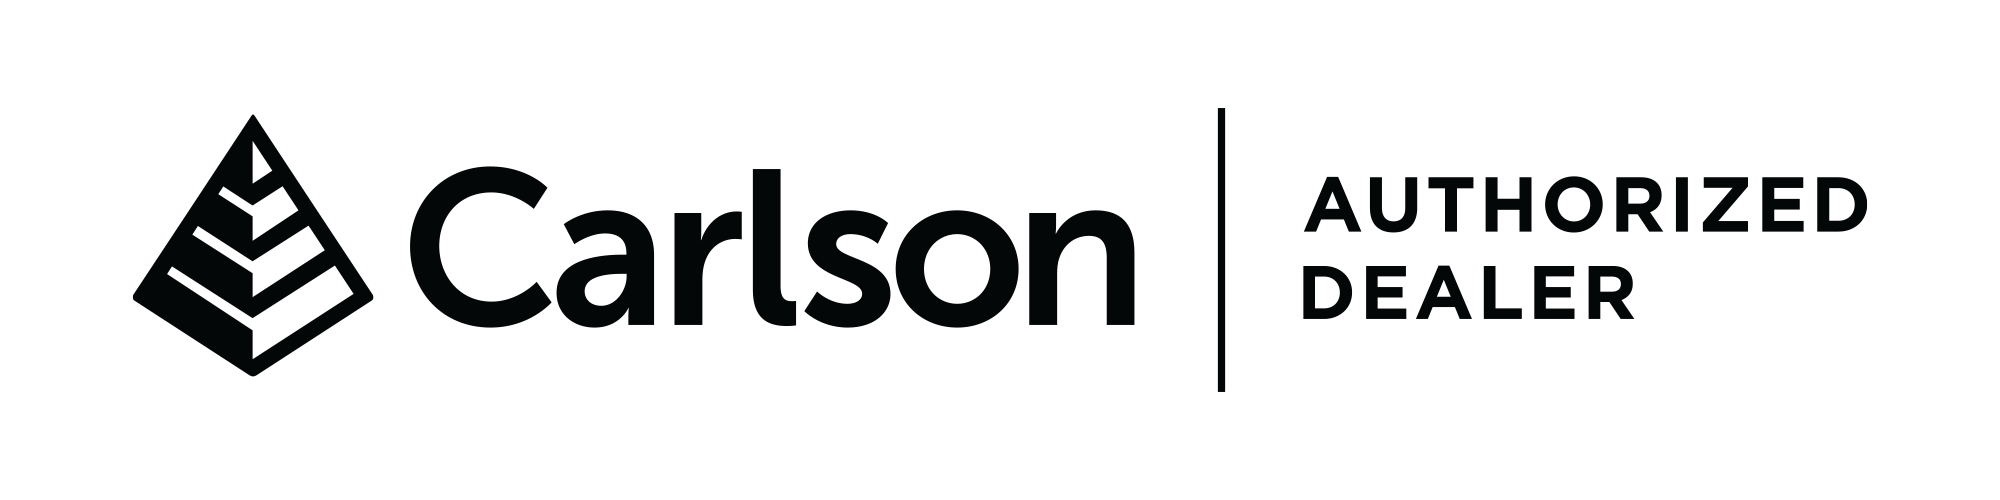 Carlson Machine Software Distributor